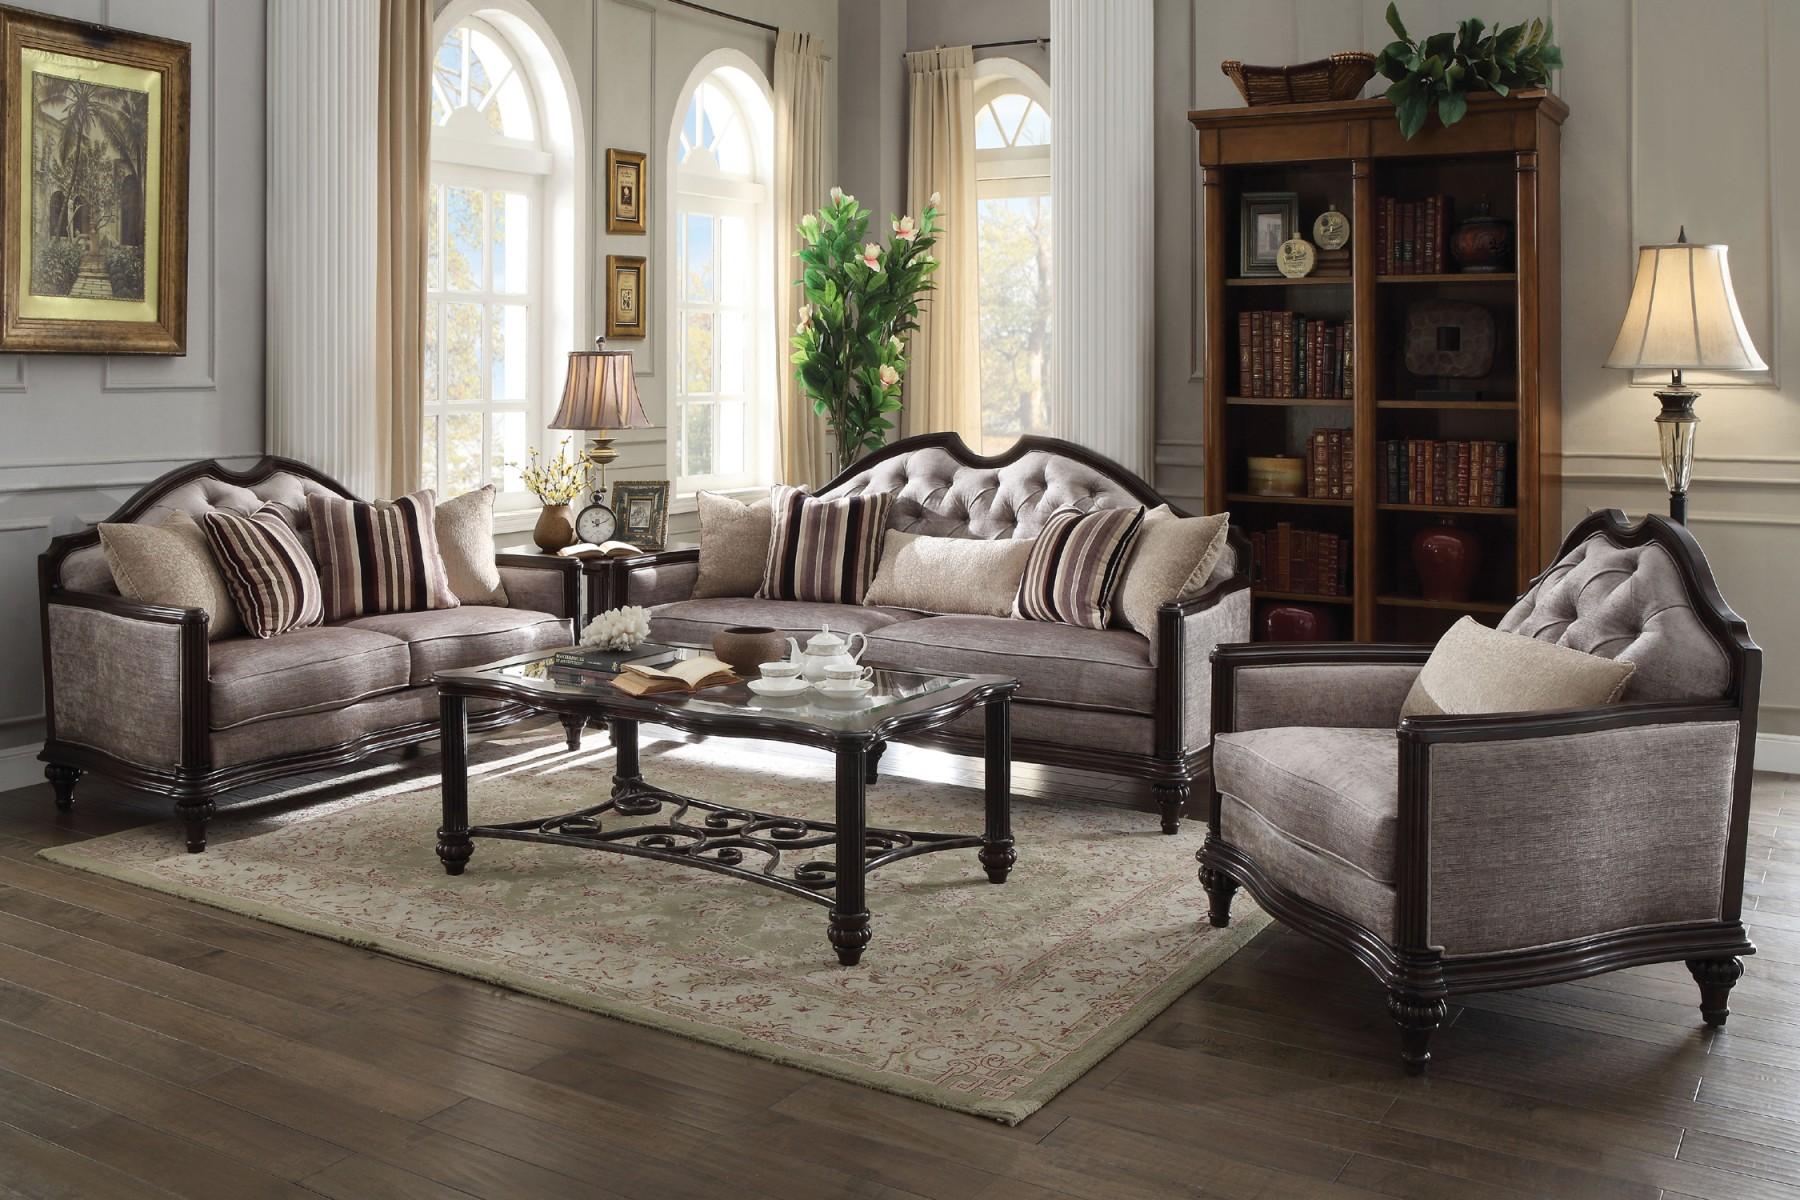 

    
Azis 53770 -Sofa Set-3 Acme Furniture 
